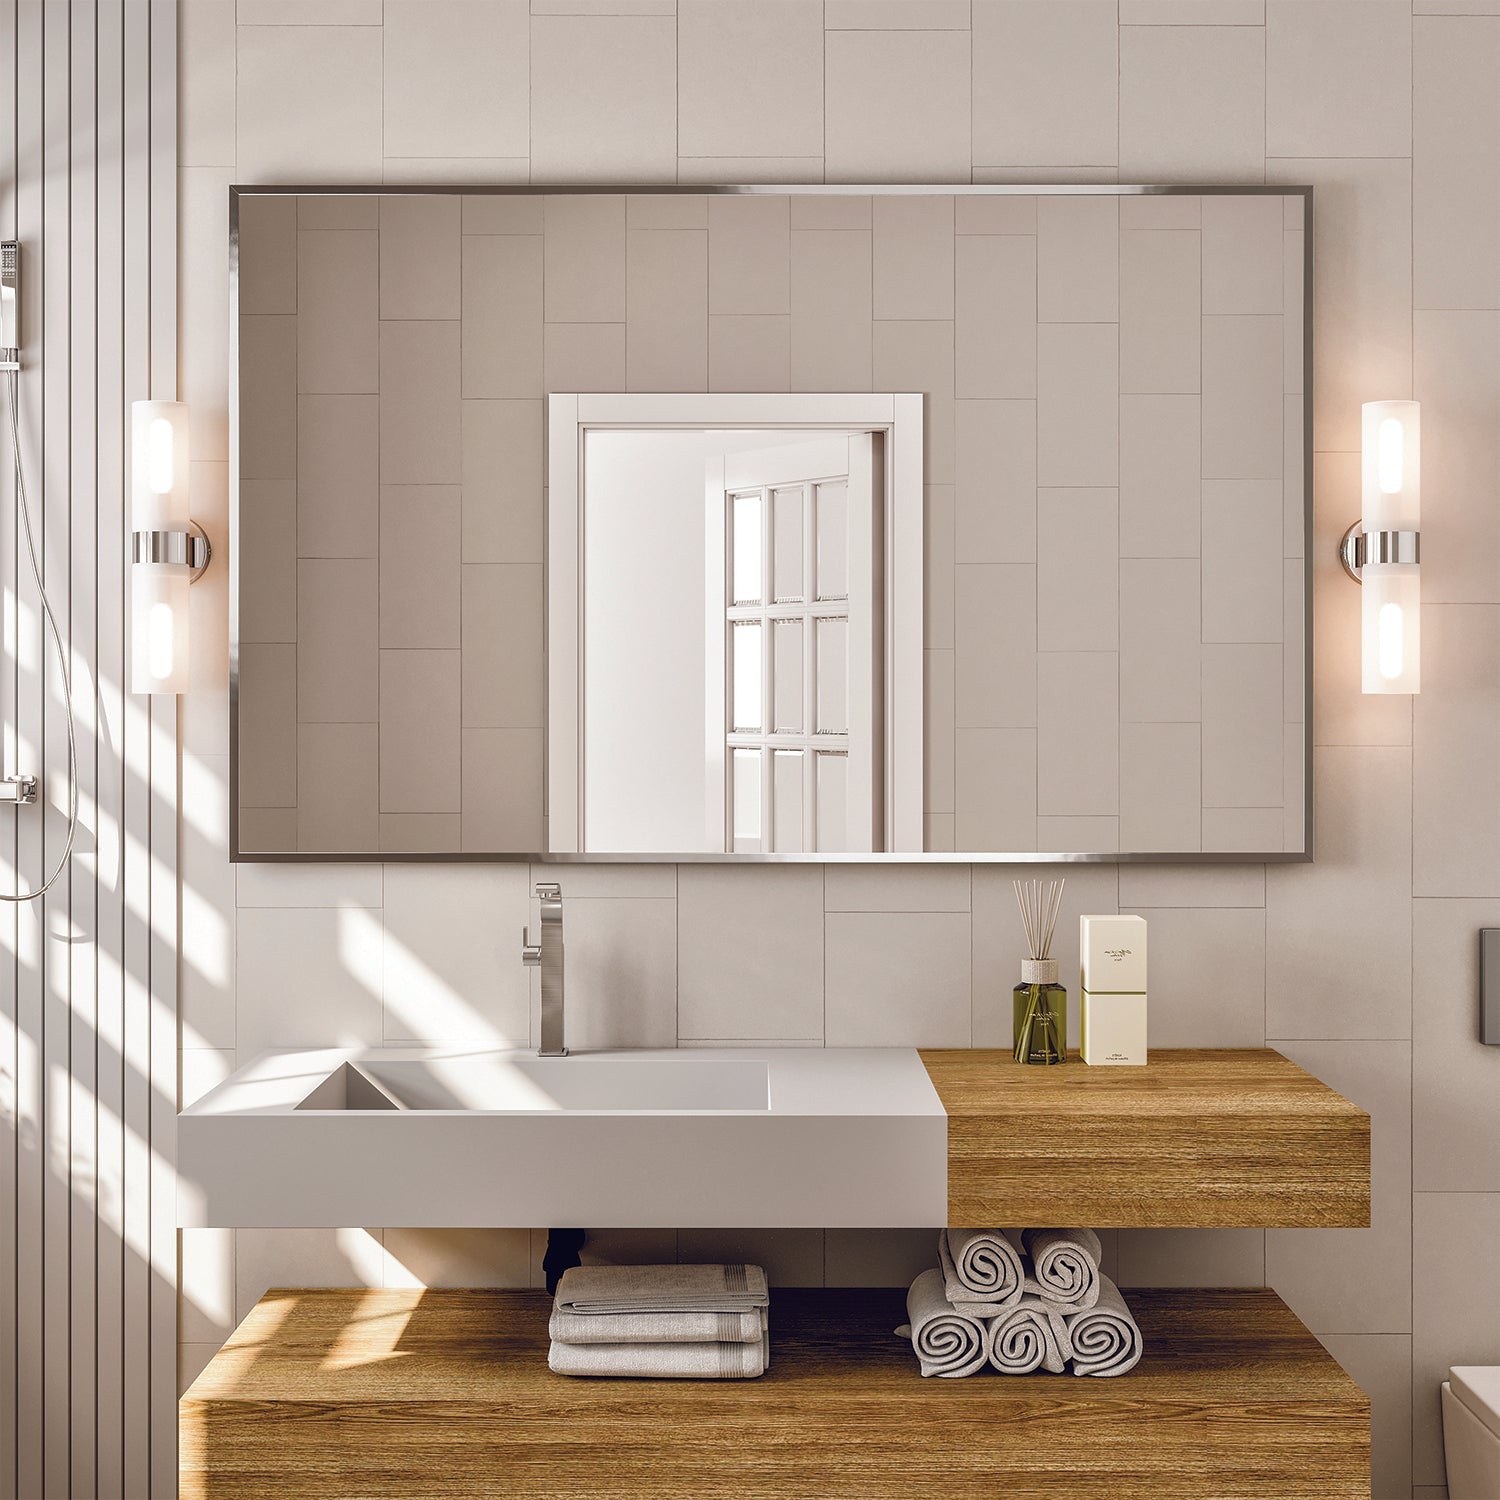  Eviva EVMR-42X30-GOK Sun - Tocadores de baño, espejo de pared  con marco completo, color gris roble gris de 42 pulgadas : Hogar y Cocina